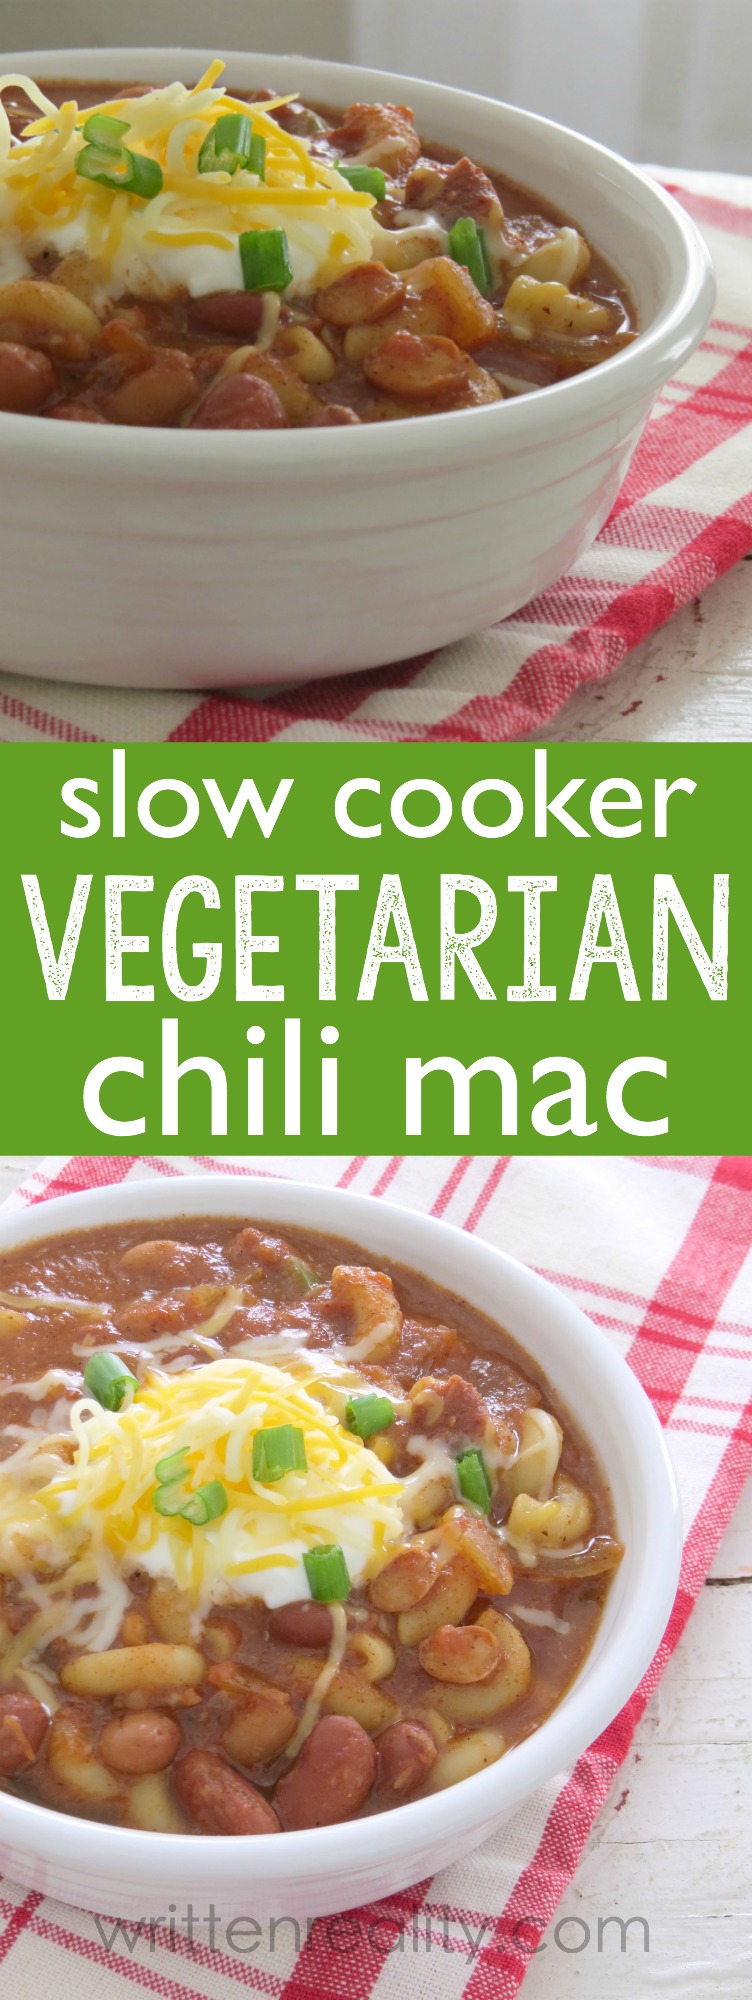 slow cooker vegetarian chili mac